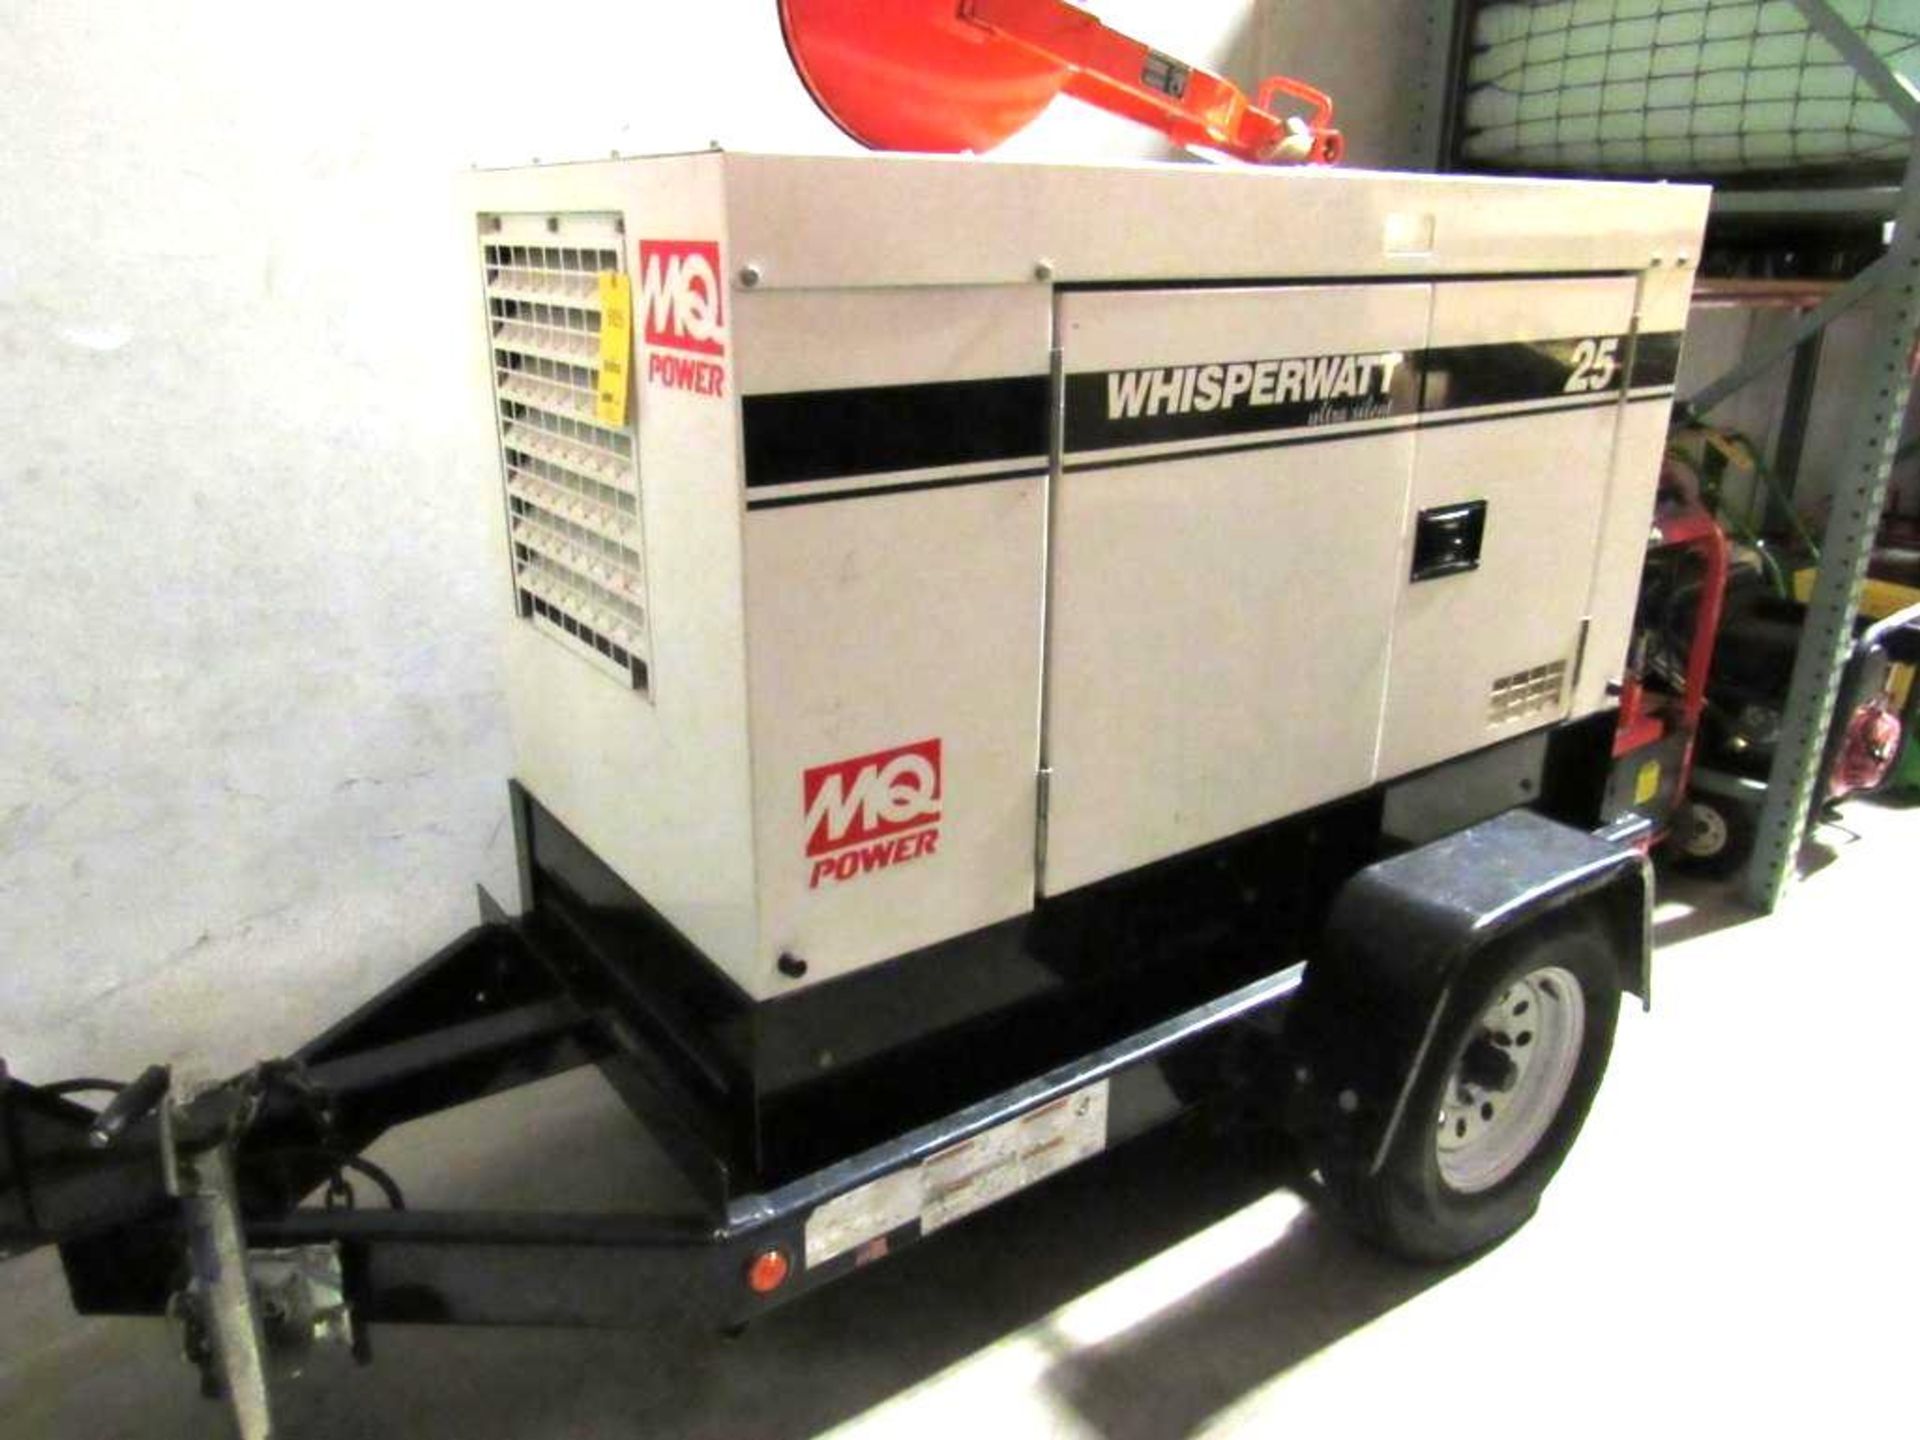 Whisperwatt Diesel Generator-25kw, Mq Wisperwatt Diesel, DCA-USI